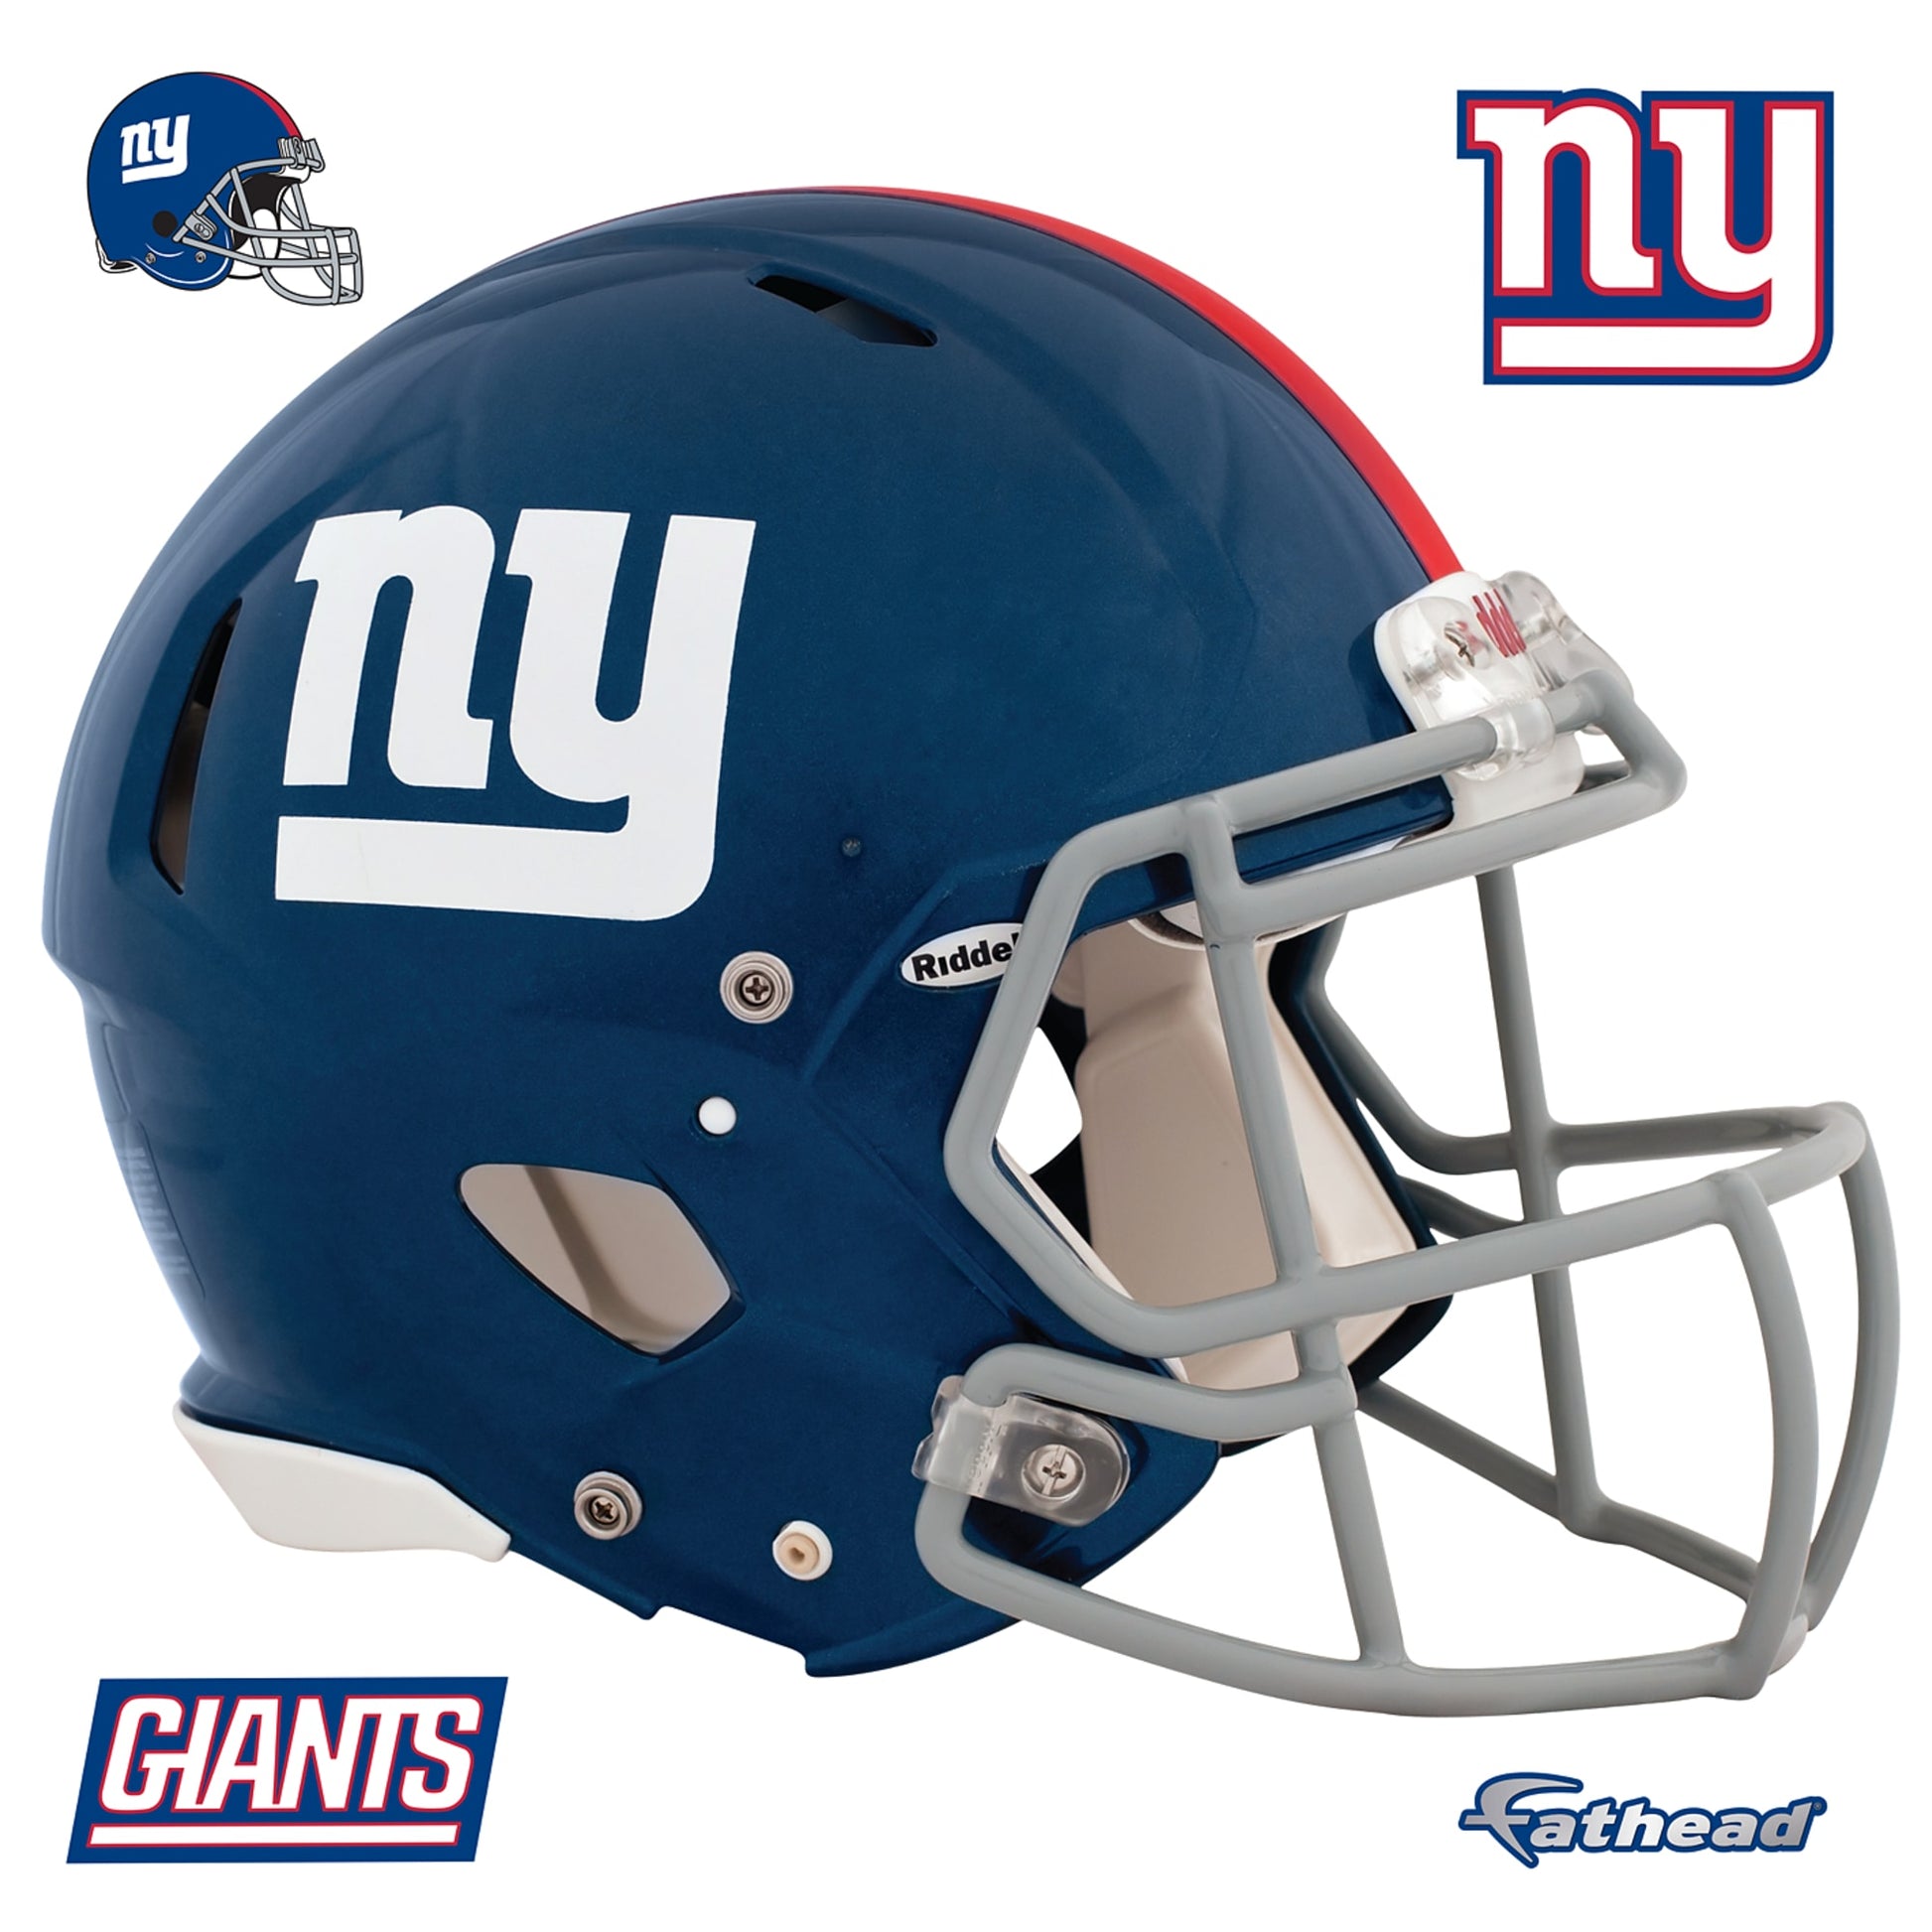 Fathead NFL Revolution Helmet Wall Decal; New York Giants